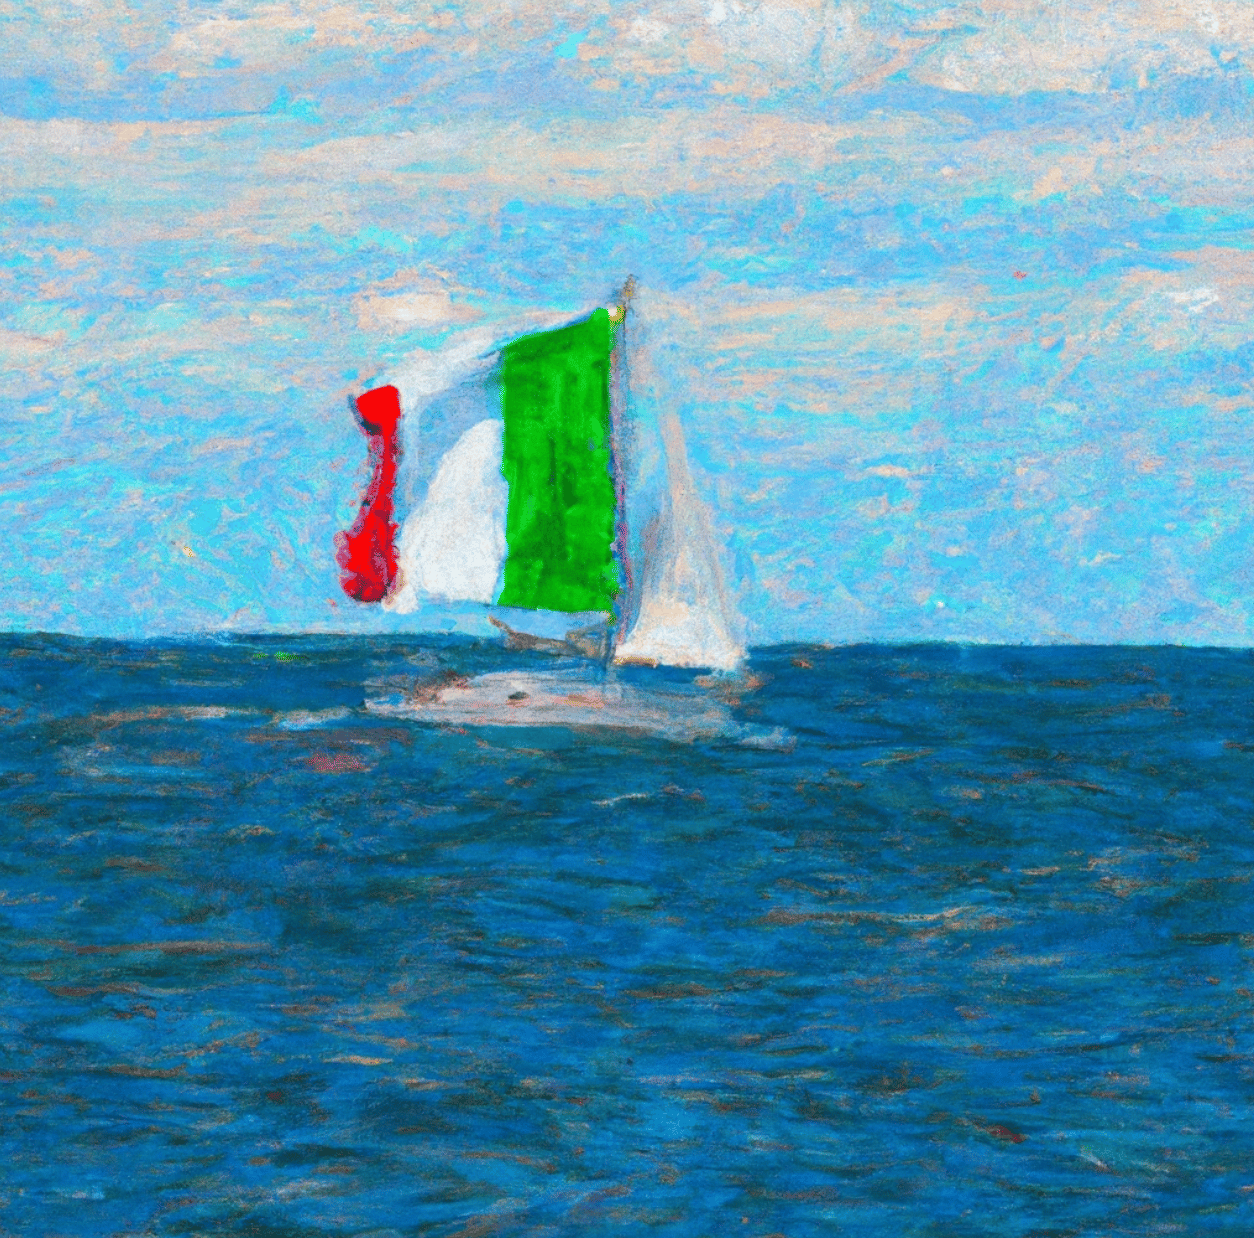 Boglehead sailing boat with the Italian flag as the sails